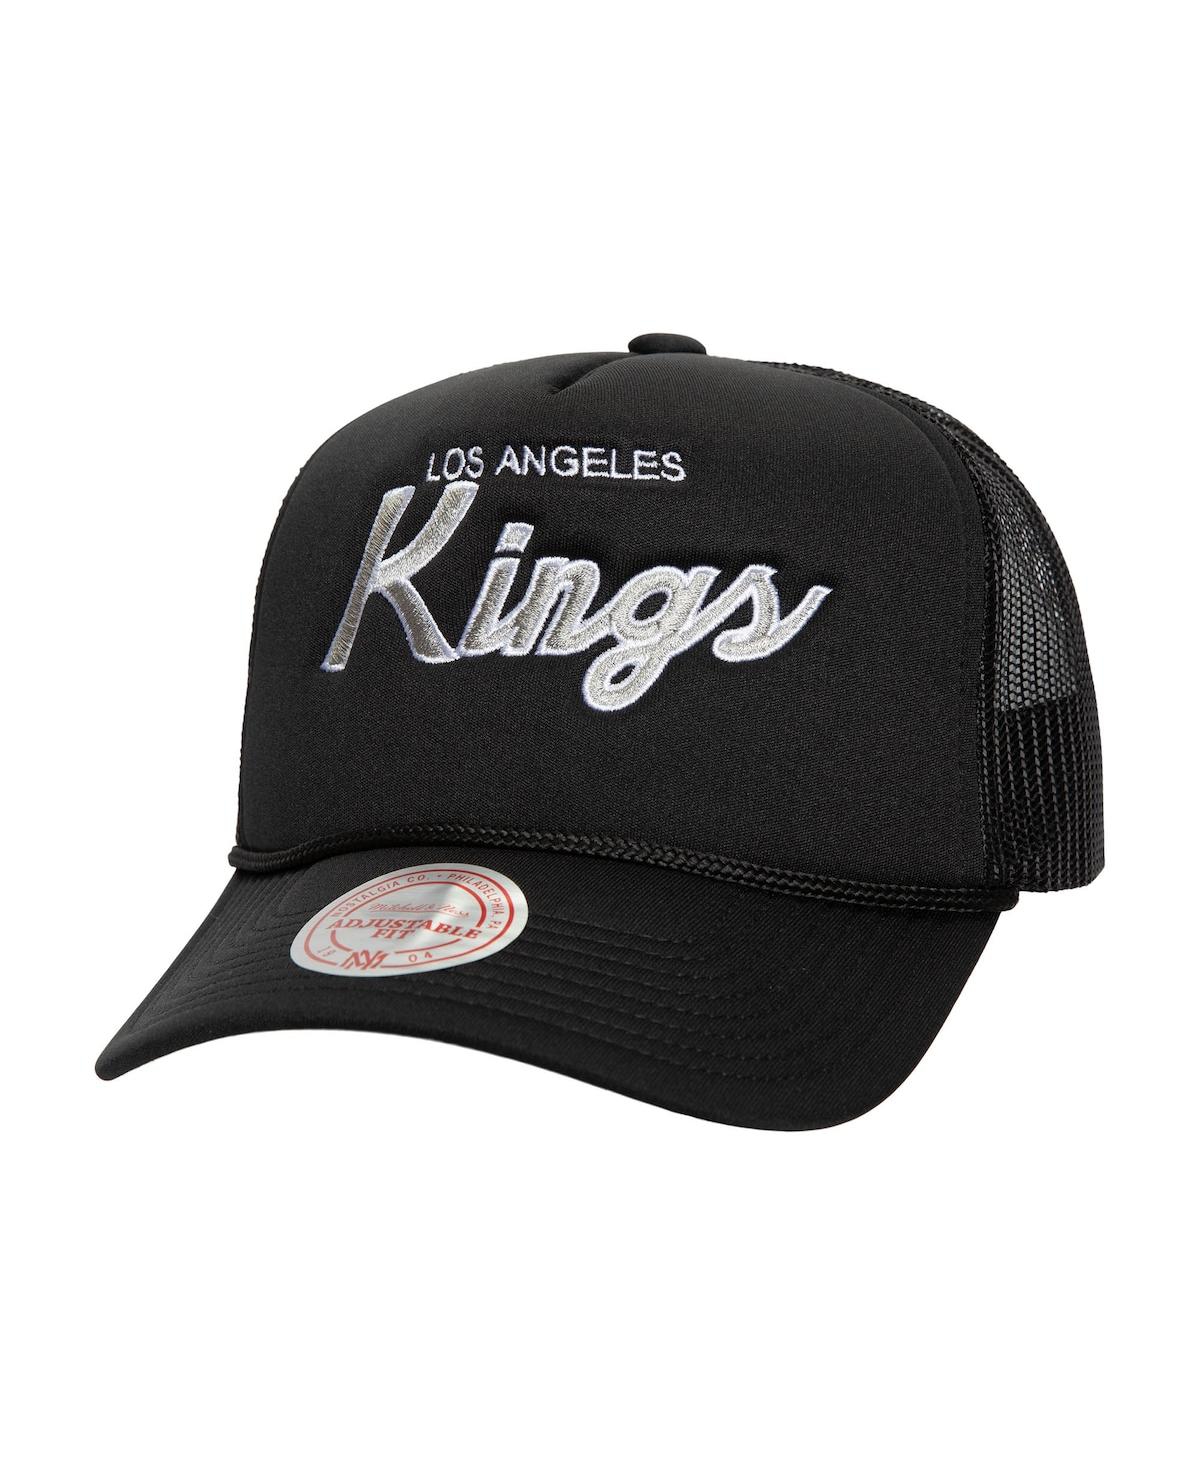 Mitchell Ness Men's Black Los Angeles Kings Script Side Patch Trucker Adjustable Hat - Black